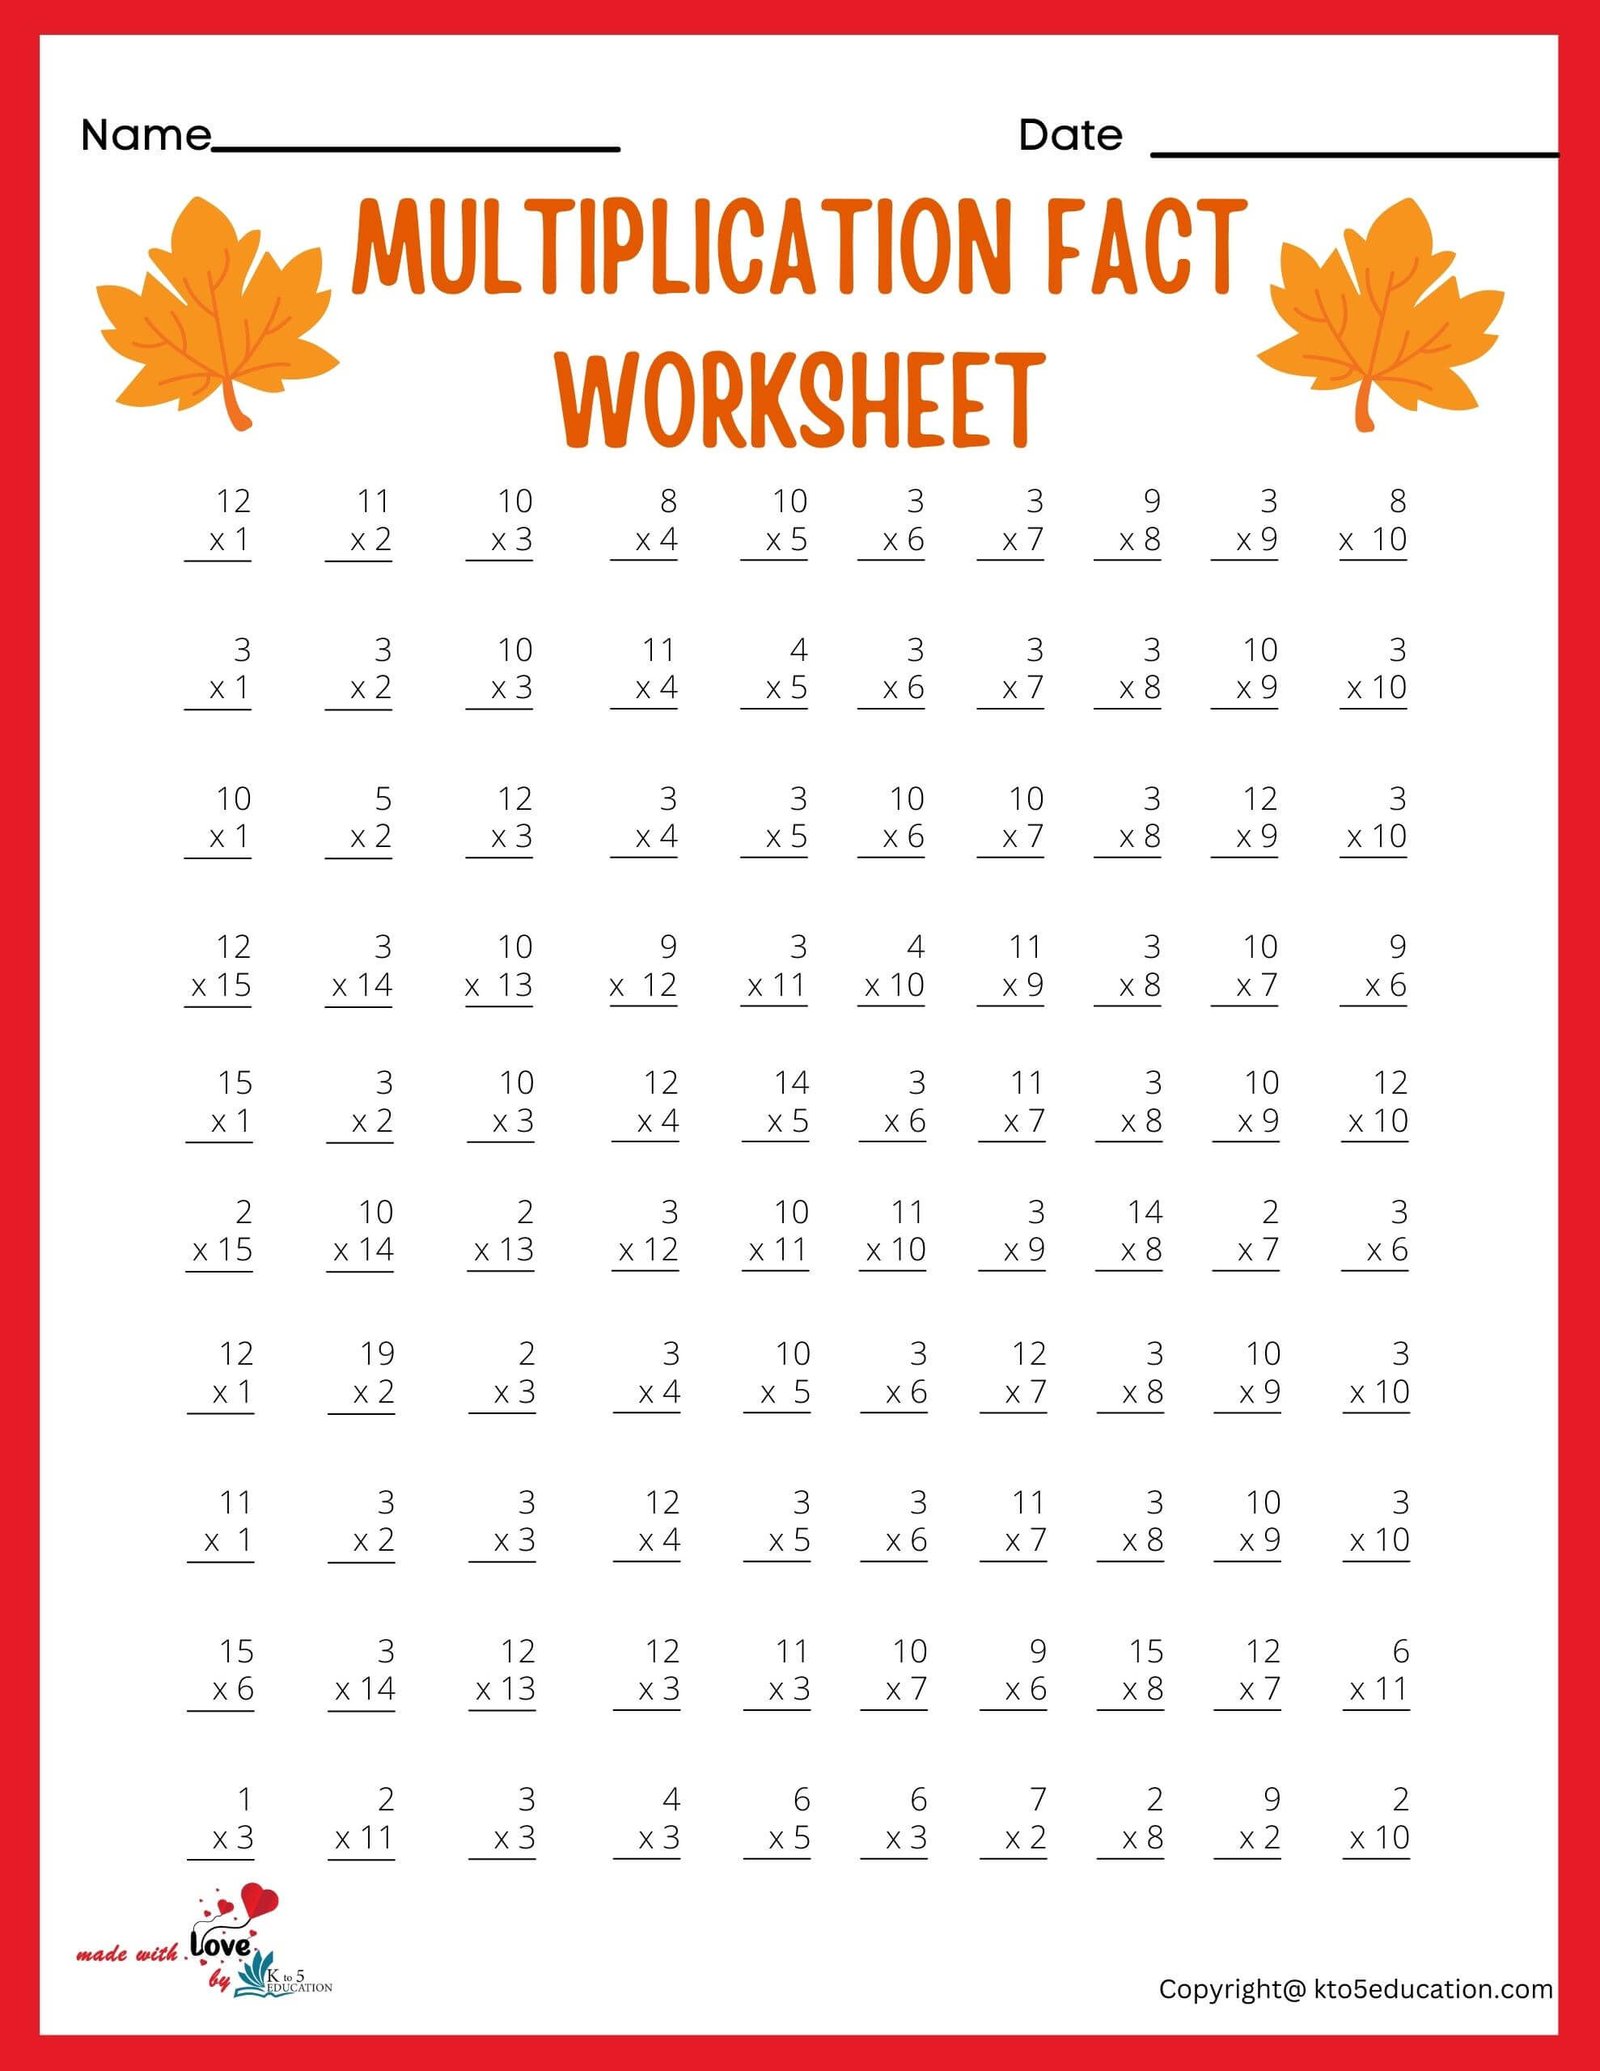 10x10 Multiplication Fact Worksheet